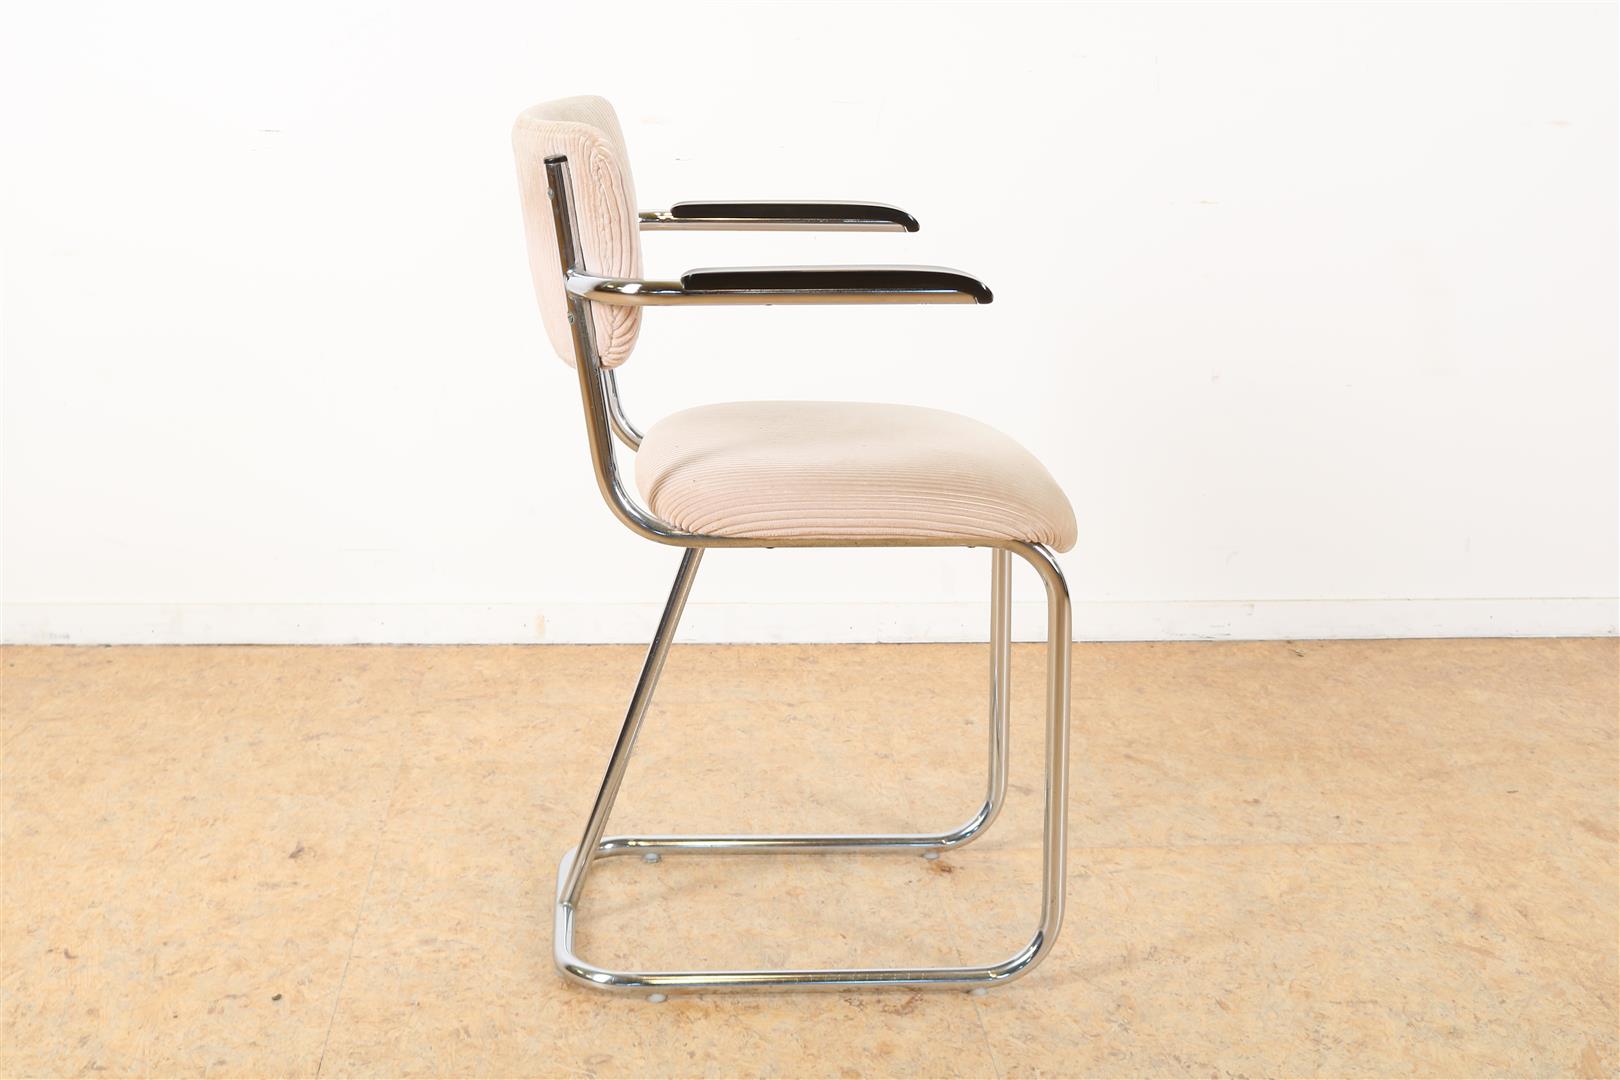 Chrome-plated design armchair with welded back support and bakelite armrests, design Gispen model - Image 2 of 5